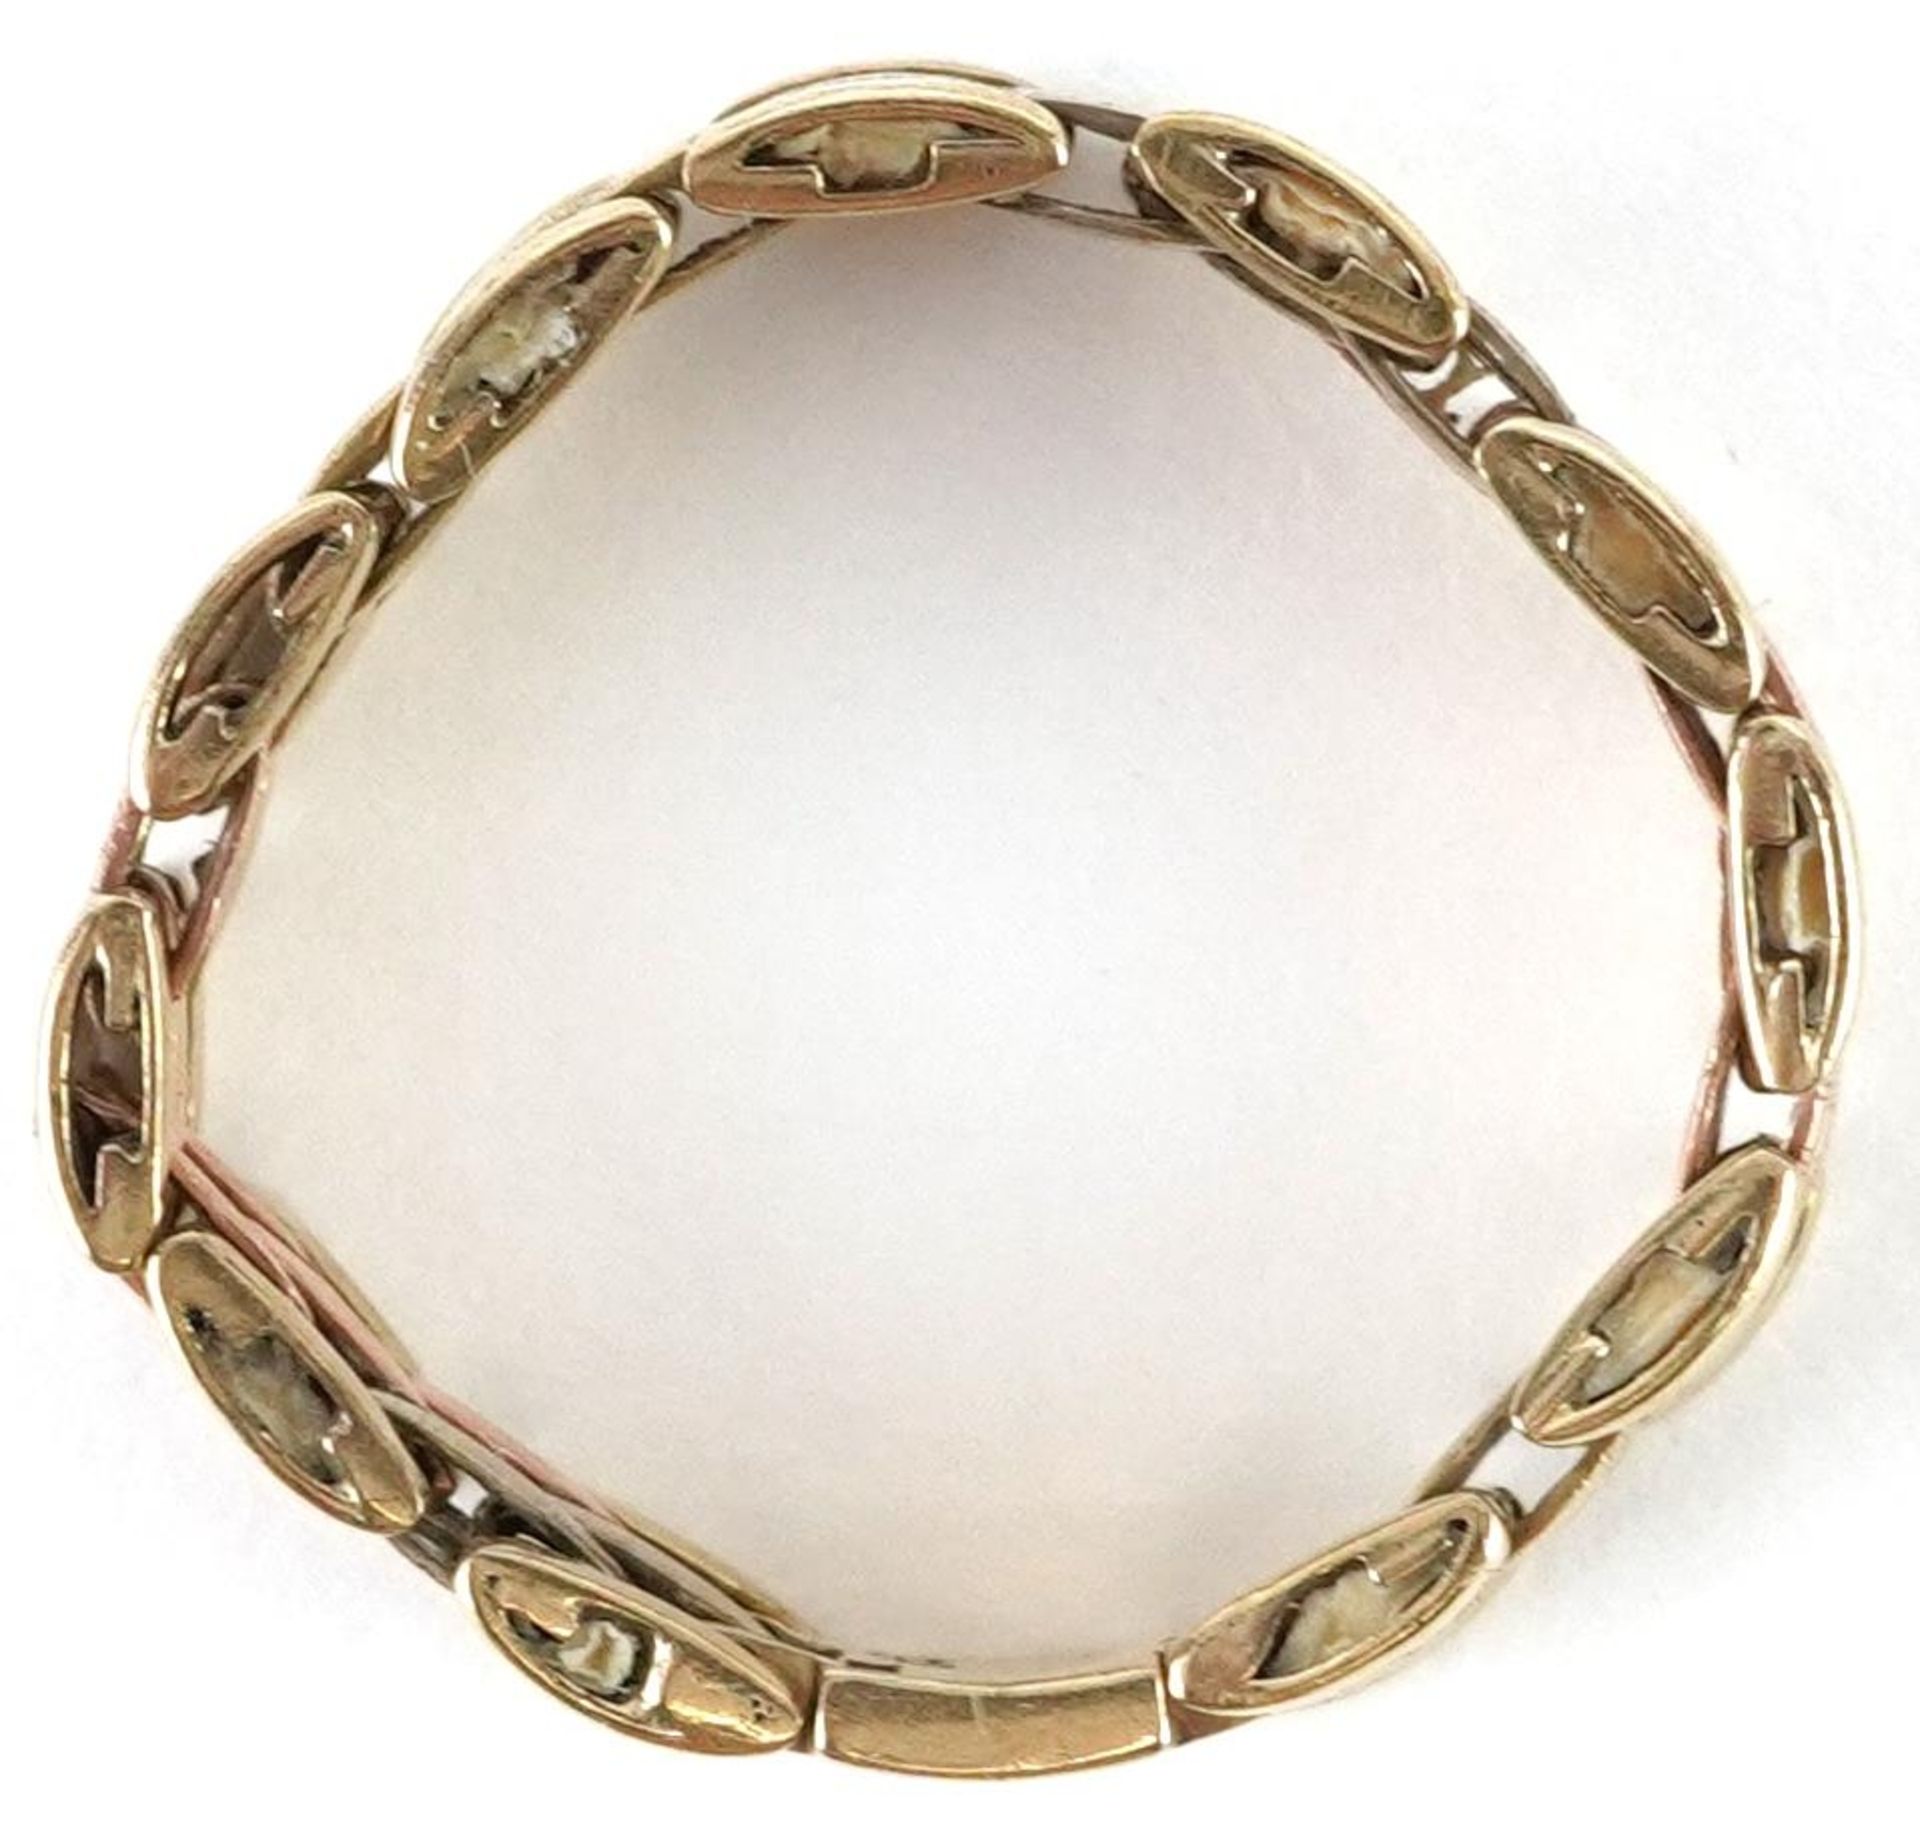 Italian 9K three tone gold watch bracelet design ring, size V, 3.4g - Image 4 of 4